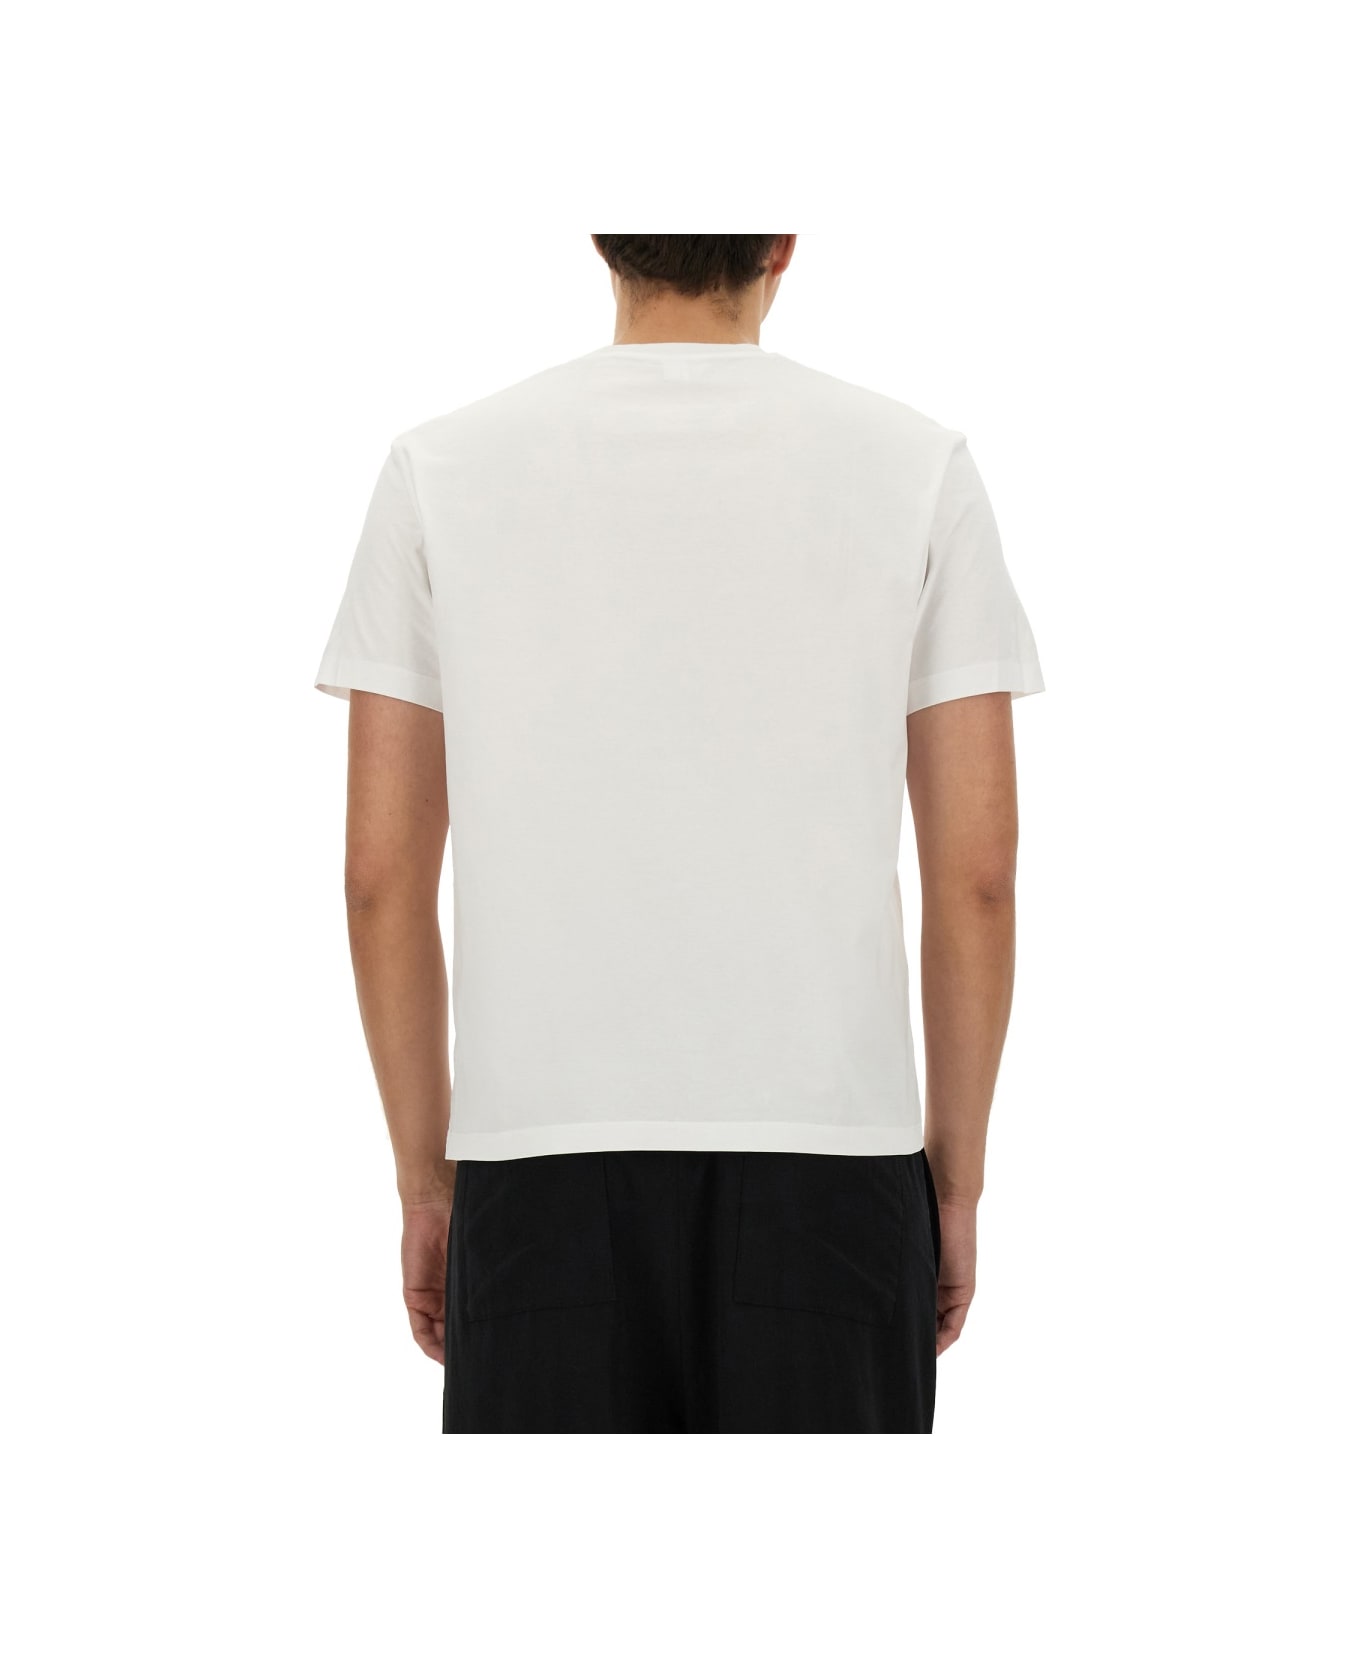 Neil Barrett "cupid" T-shirt - WHITE